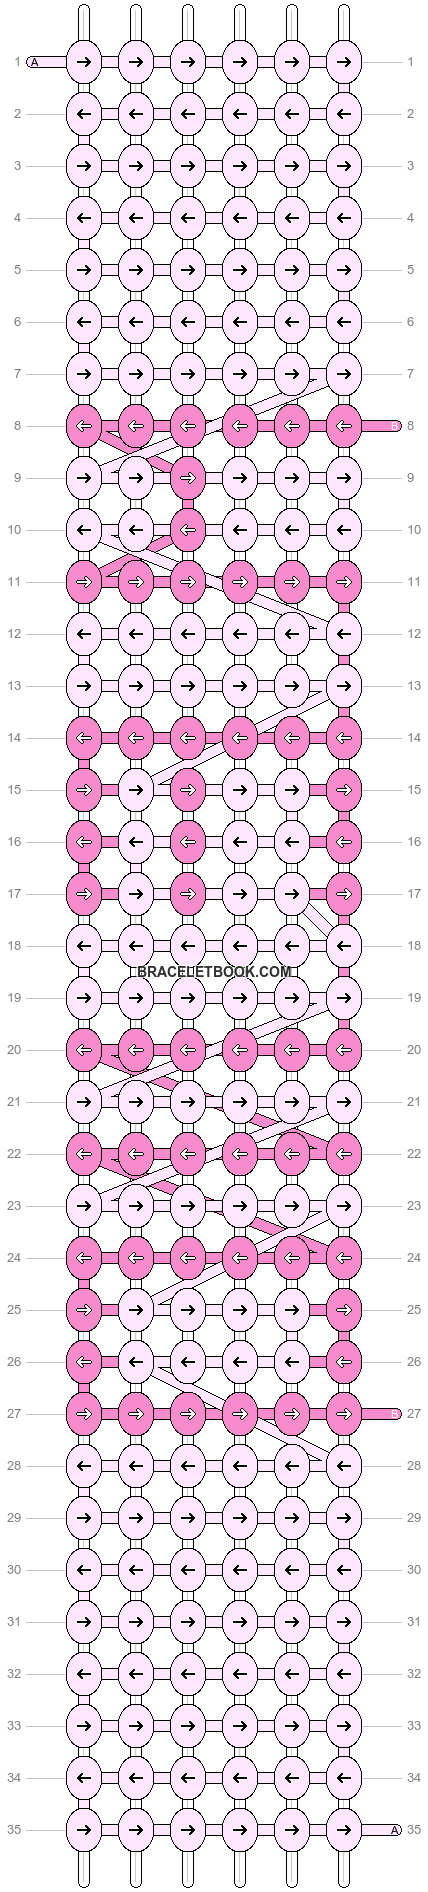 Alpha pattern #2001 variation #114337 pattern